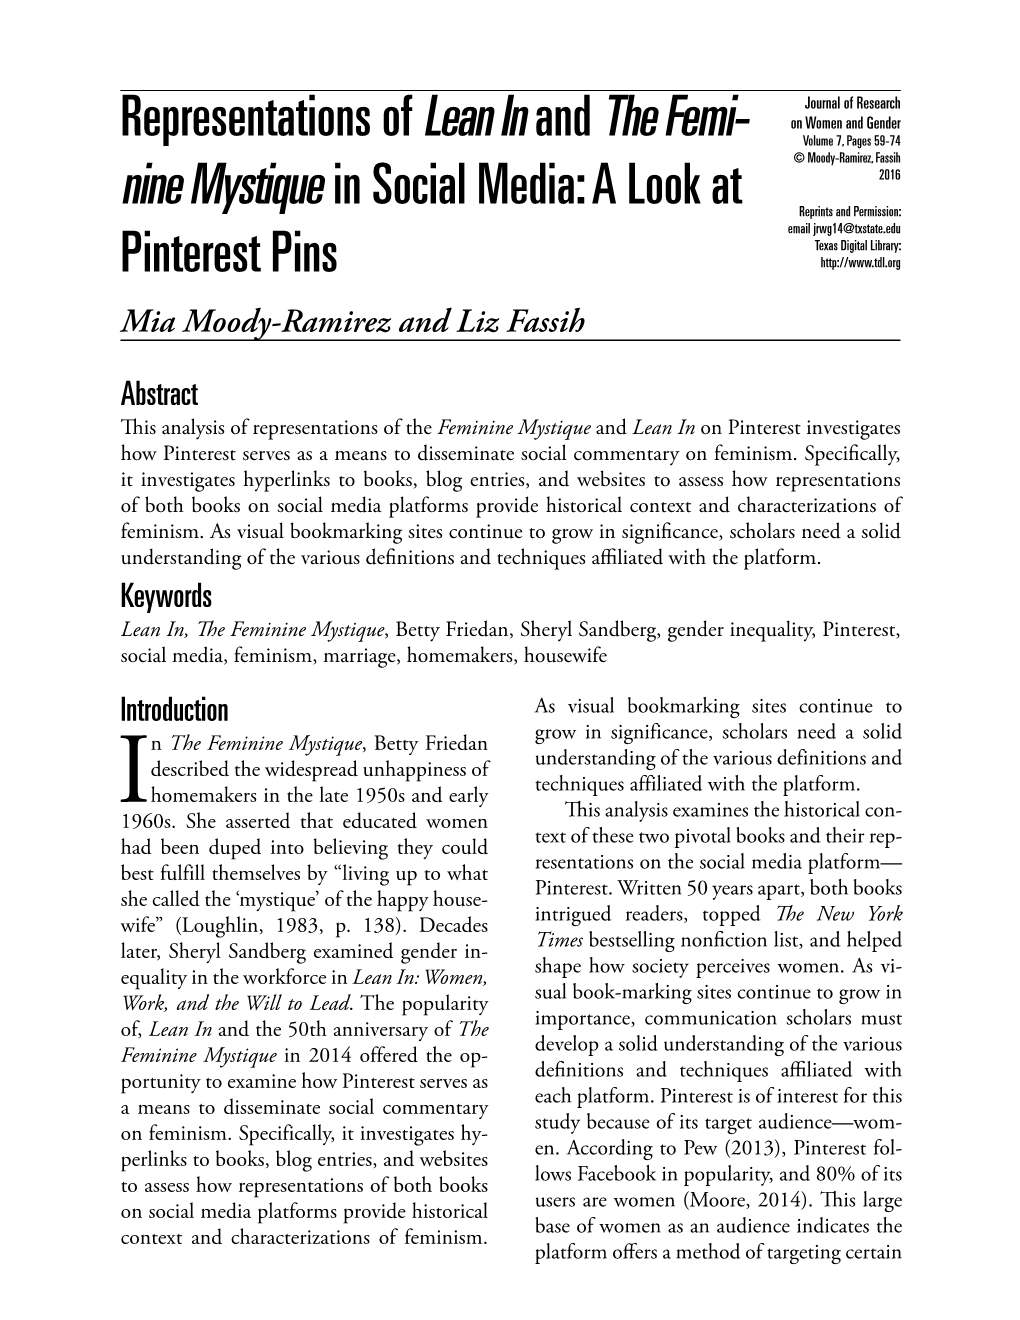 Representations of Lean in and the Femi- Nine Mystique in Social Media